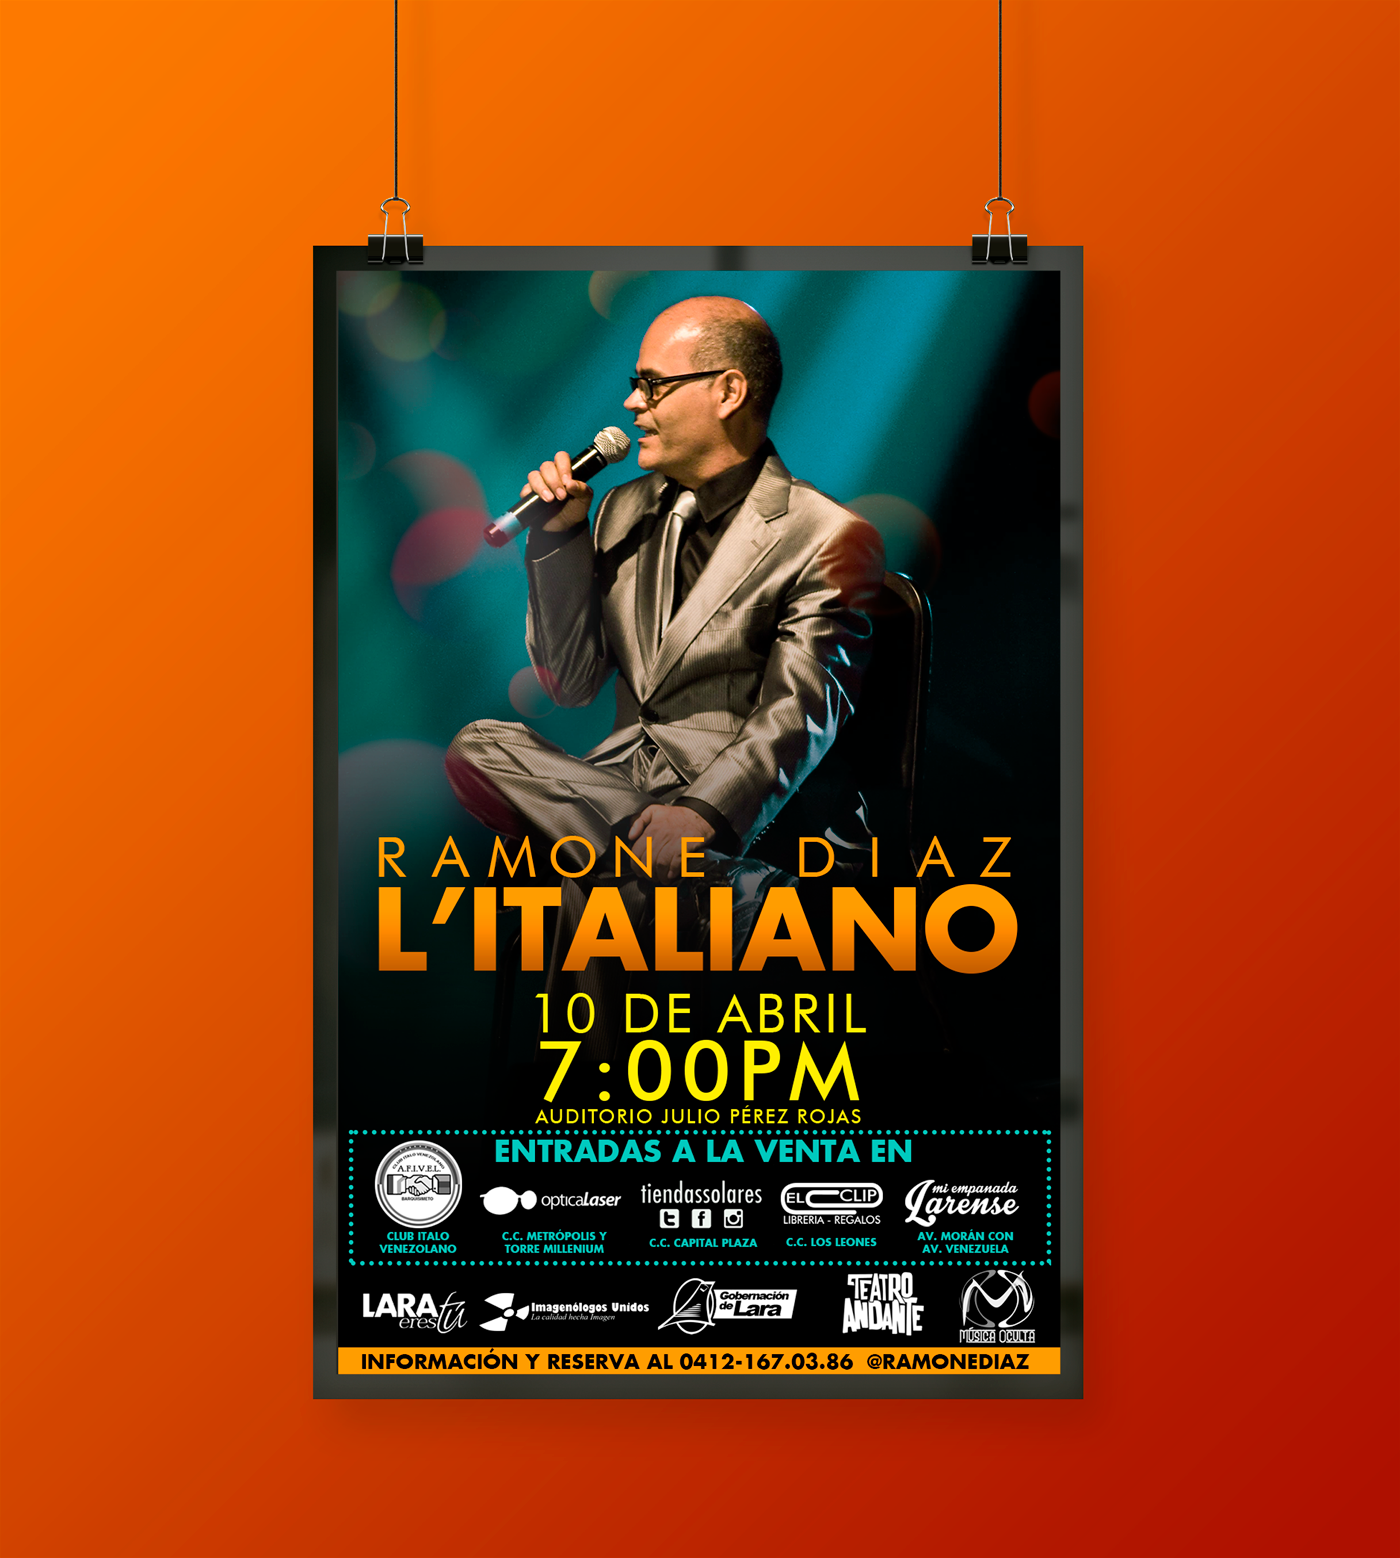 #Poster #concert  #singer #music #ramonediaz #litaliano #afiche   #graphicDesign #venezuela #light